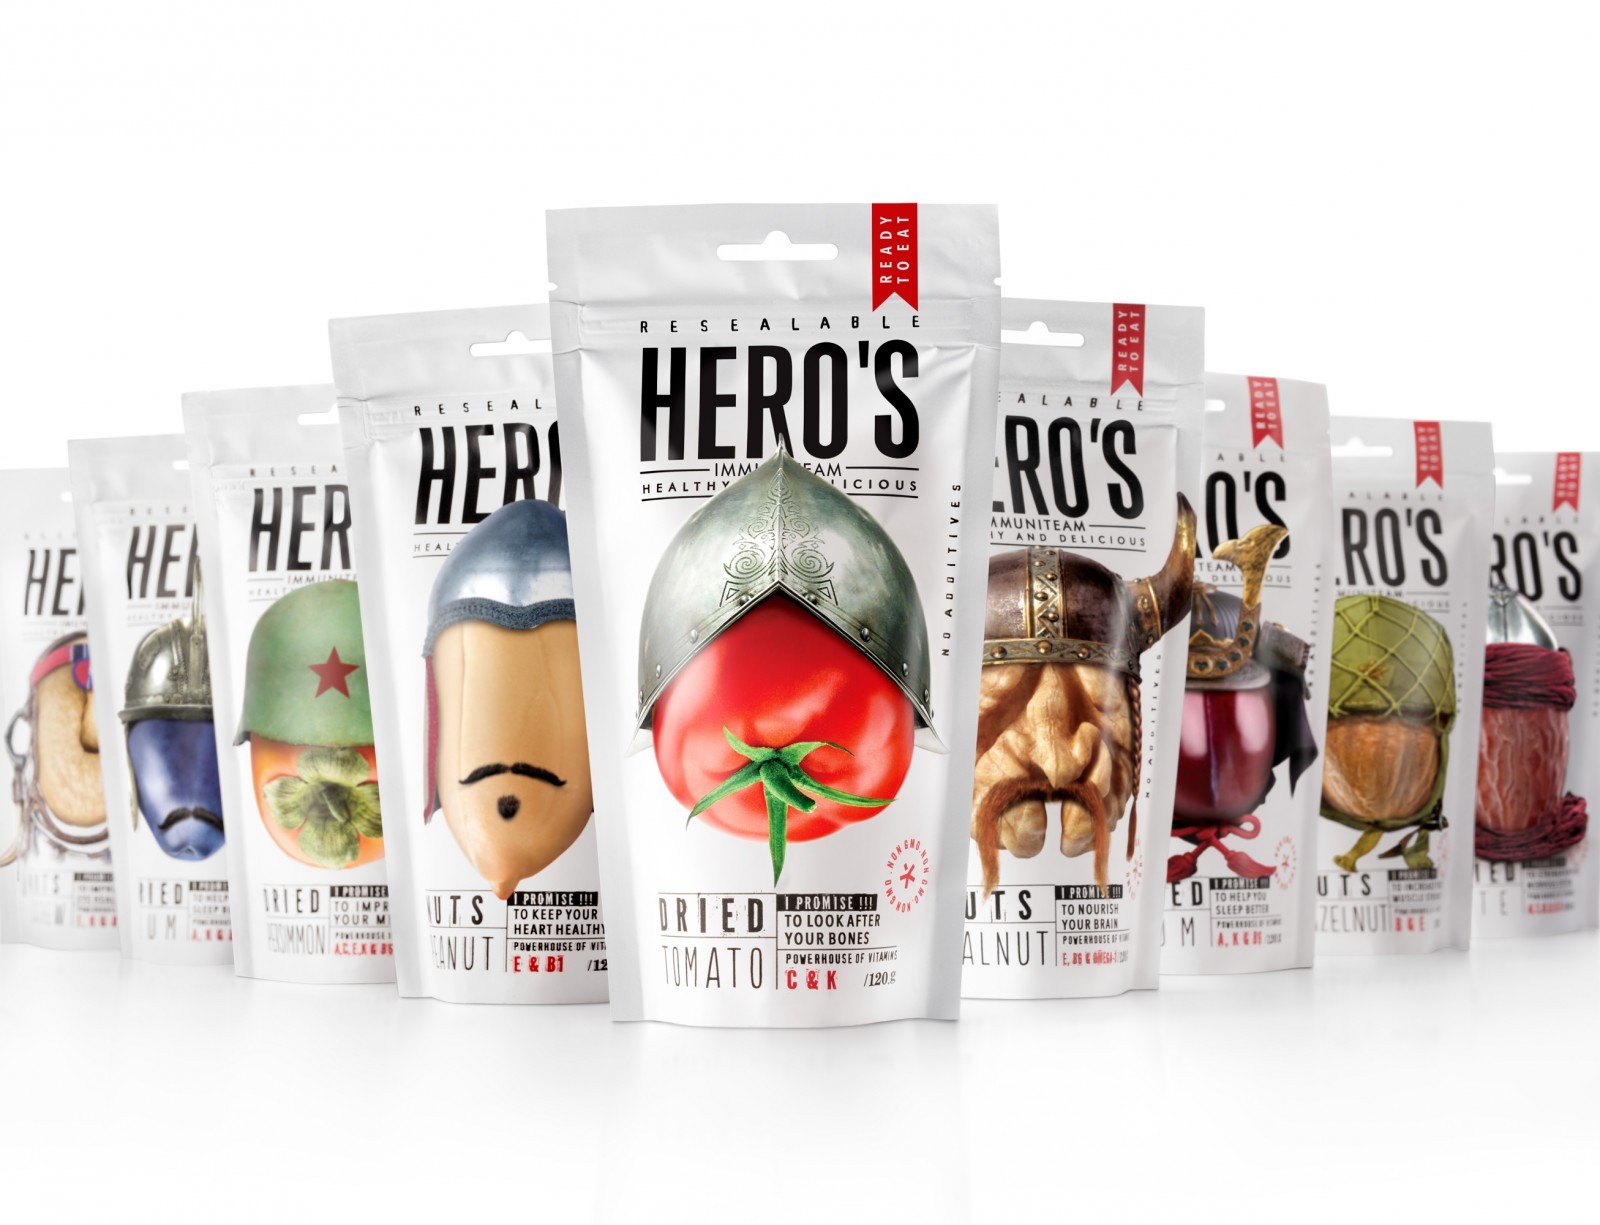 Backbone Branding Create Hero’s an ‘Immuniteam” of Super Foods Fighting for Your Health